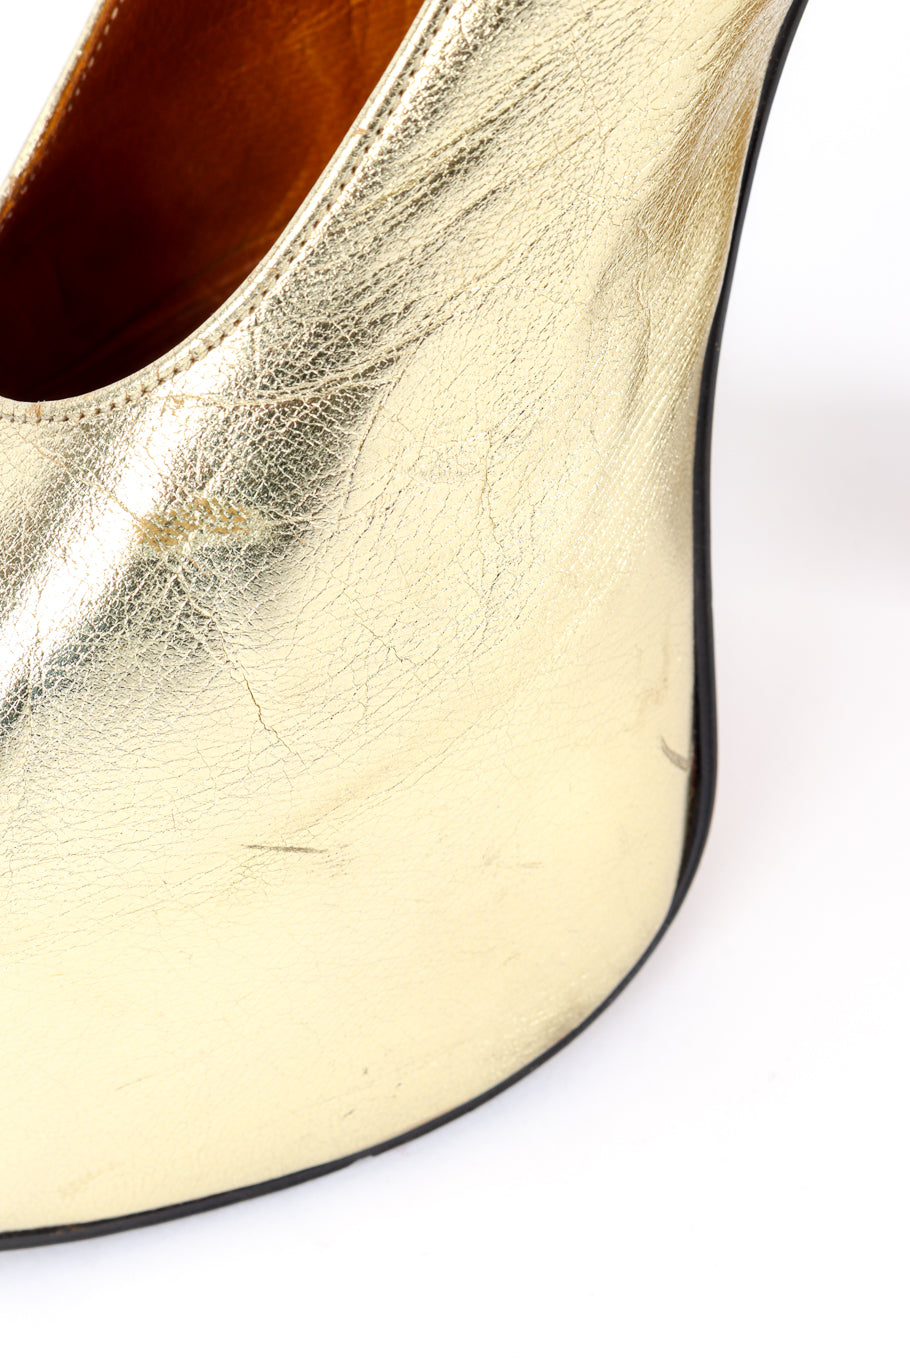 Vintage Vivienne Westwood 1993 F/W Metallic Gold Elevated Court Shoe left shoe outer upper closeup @recessla